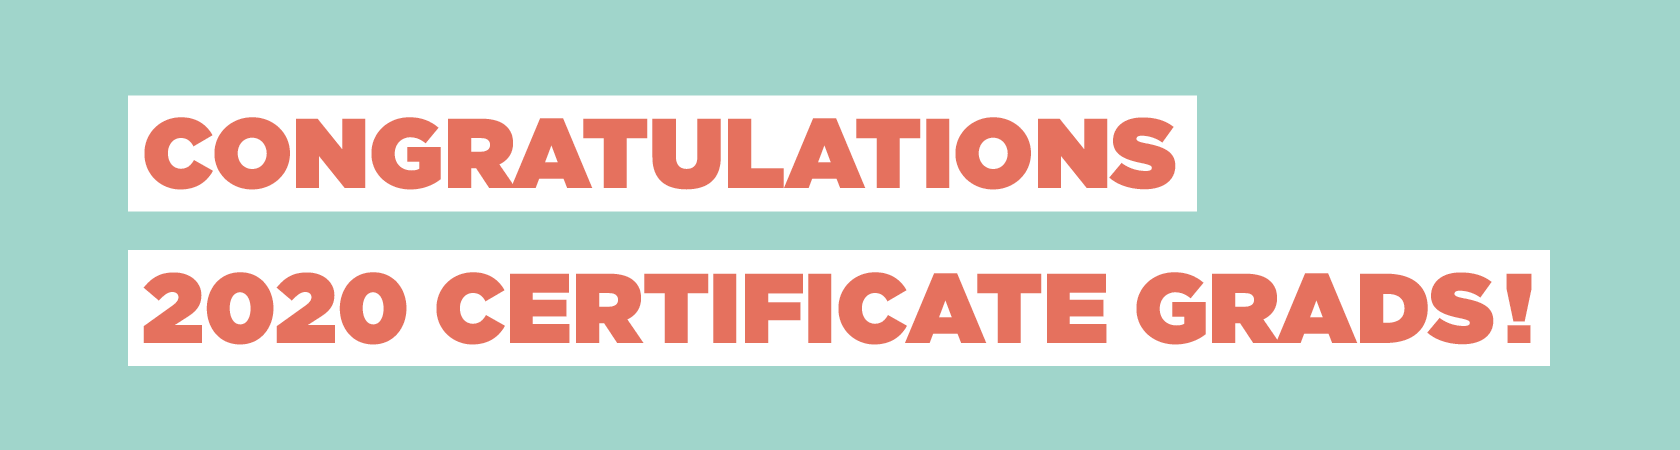 Congratulations 2020 certificate grads